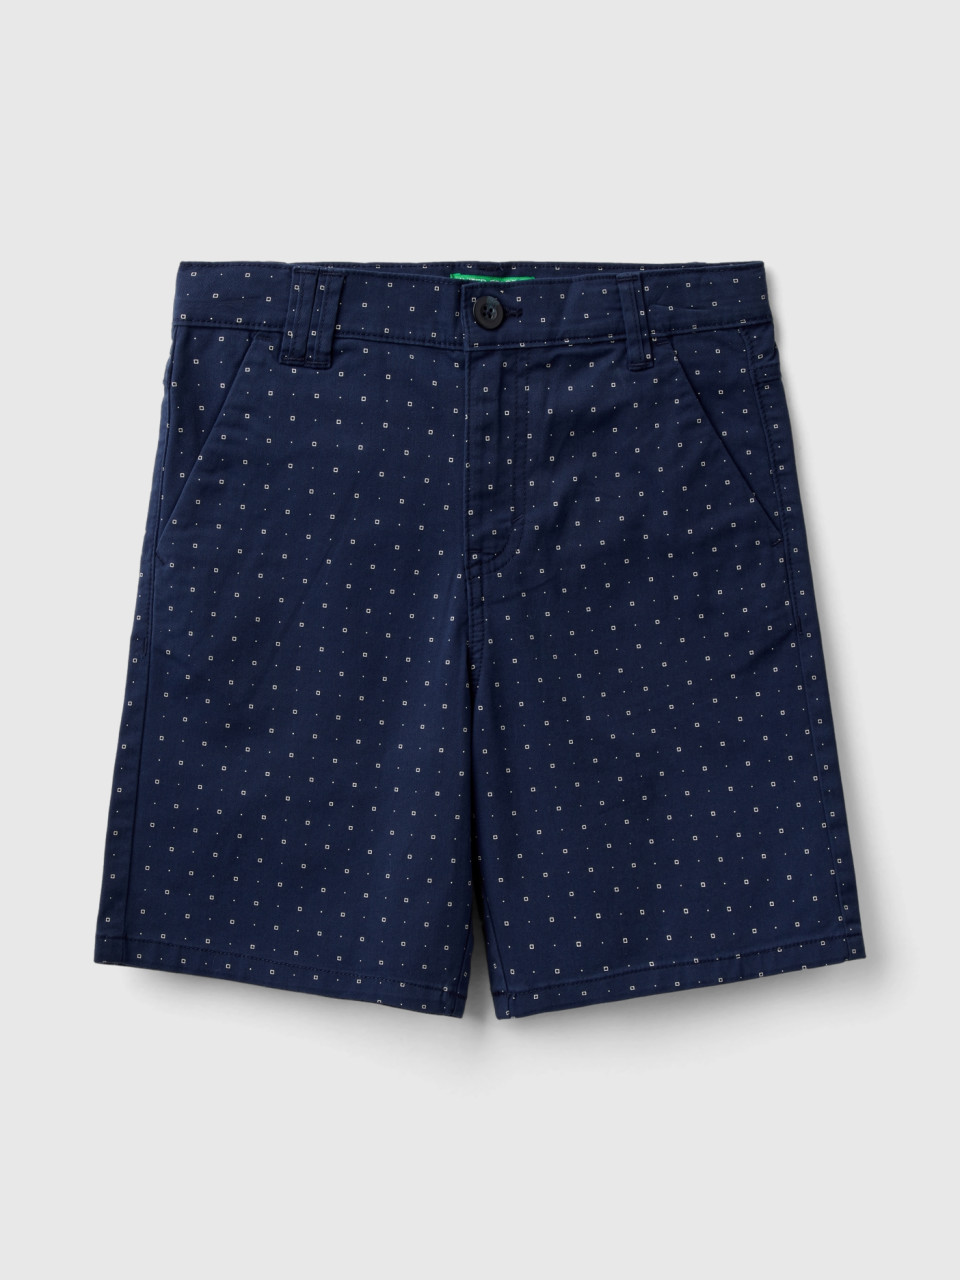 Benetton, Bermuda-shorts Slim Fit Mit Mikromuster, Dunkelblau, male